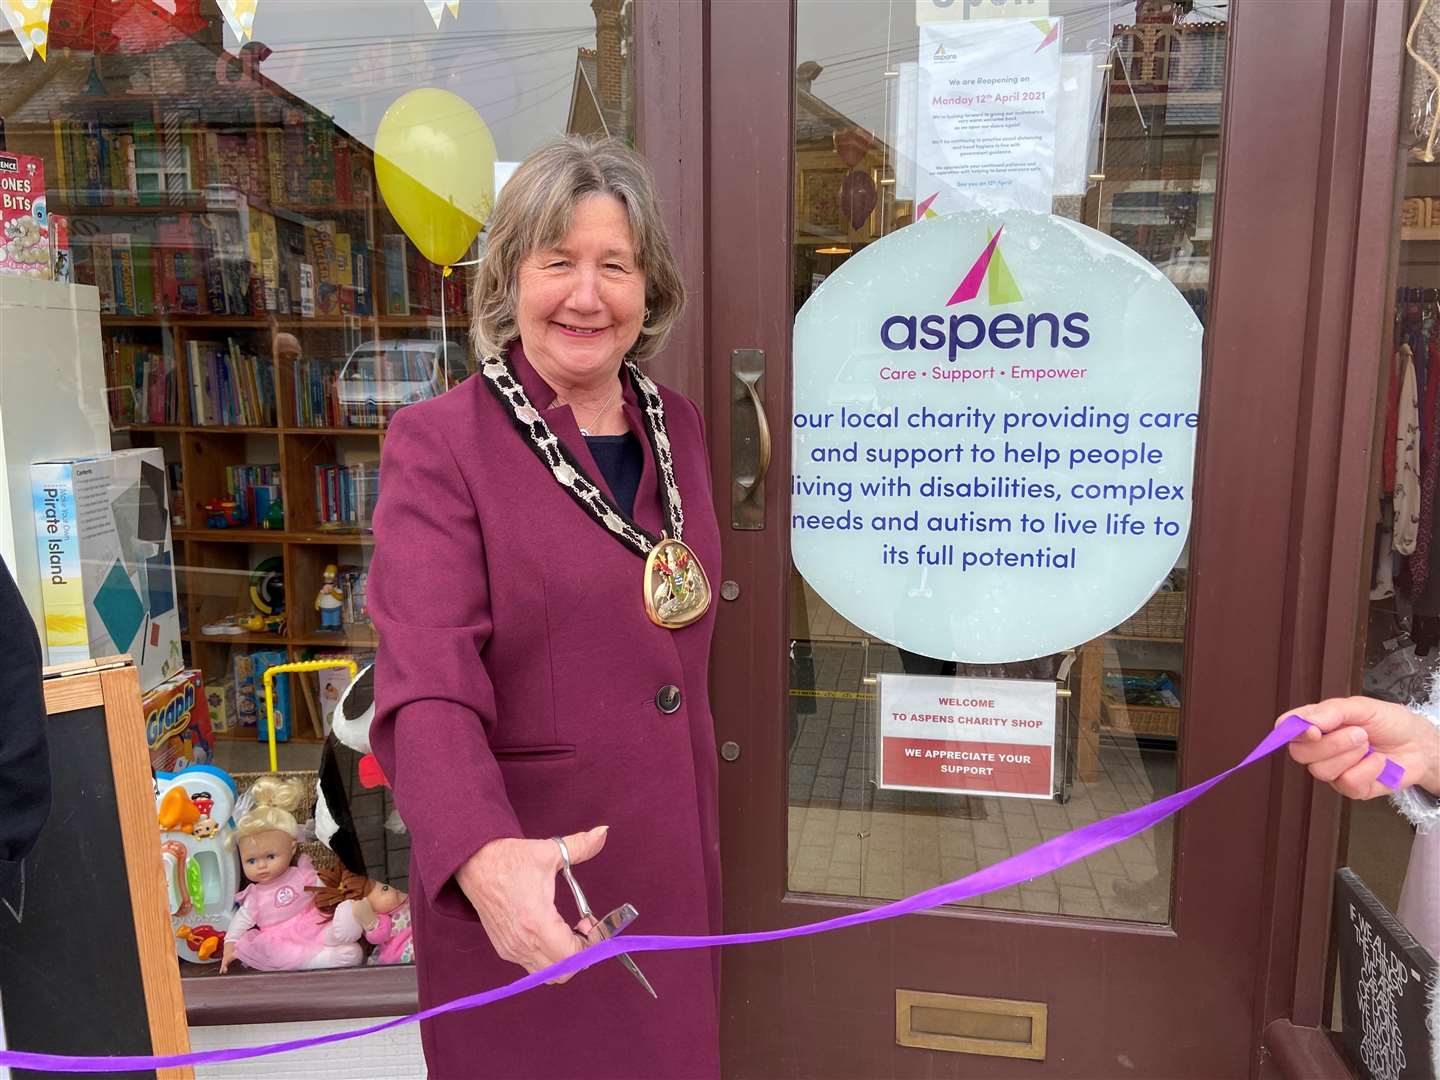 The former Mayor of Tunbridge Wells, Cllr Joy Podbury, re-opening the Aspens charity shop in Paddock Wood last year following the lockdown